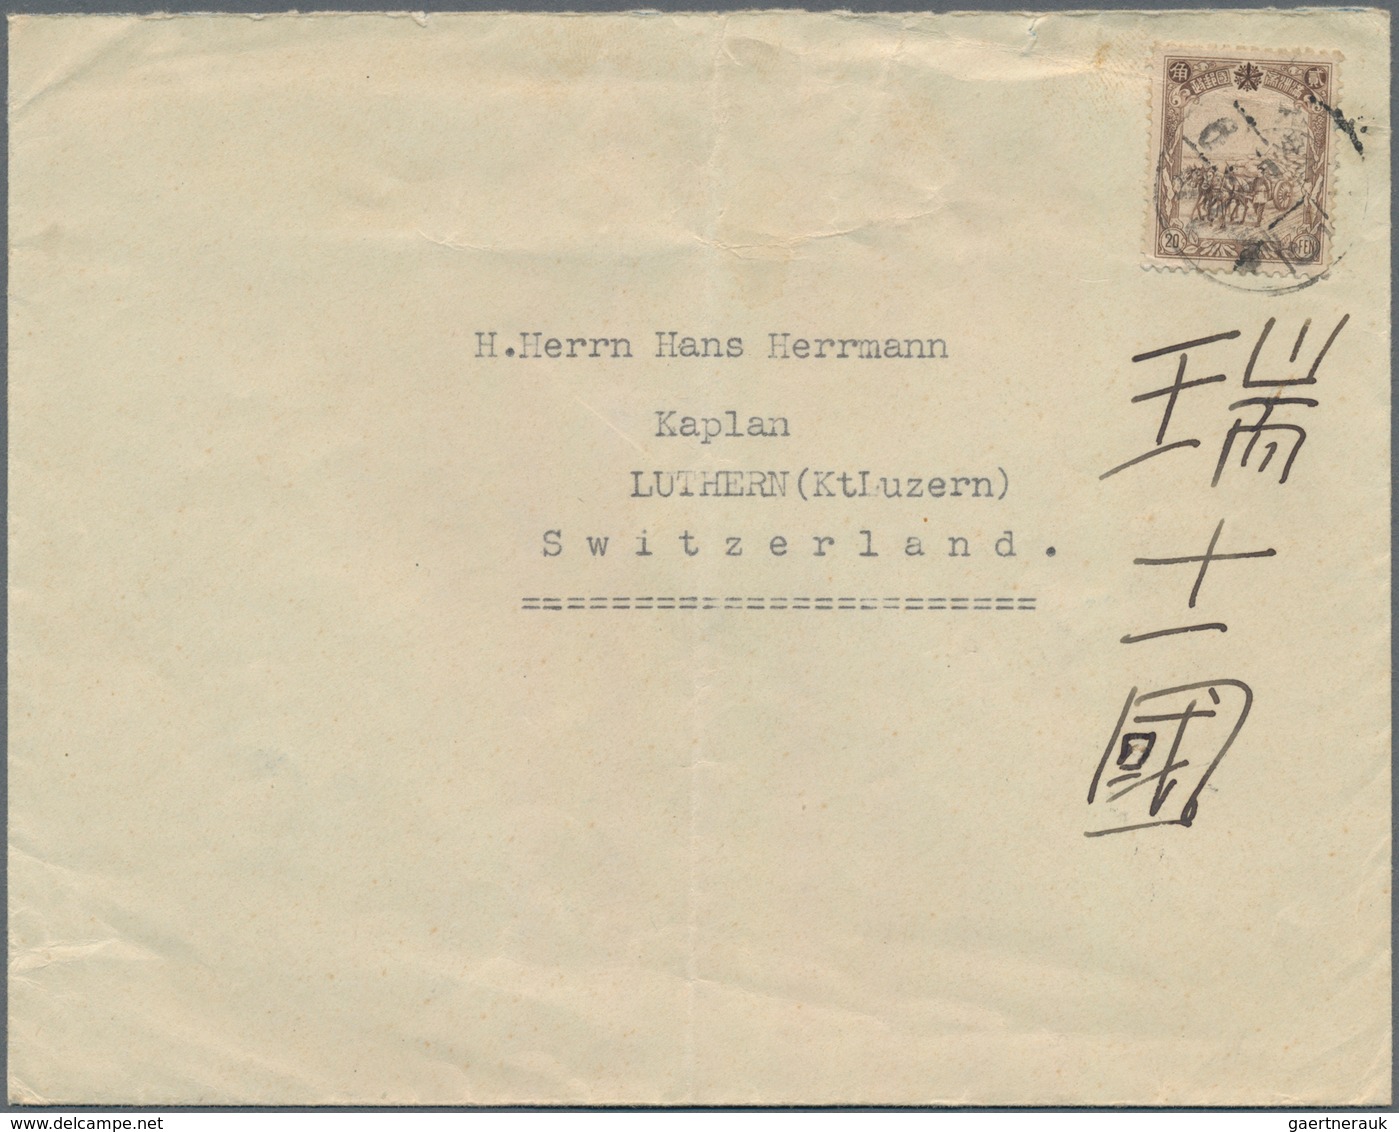 Mandschuko (Manchuko): 1939/43, covers (4) to Switzerland (3 inc. registered, the latter with intere